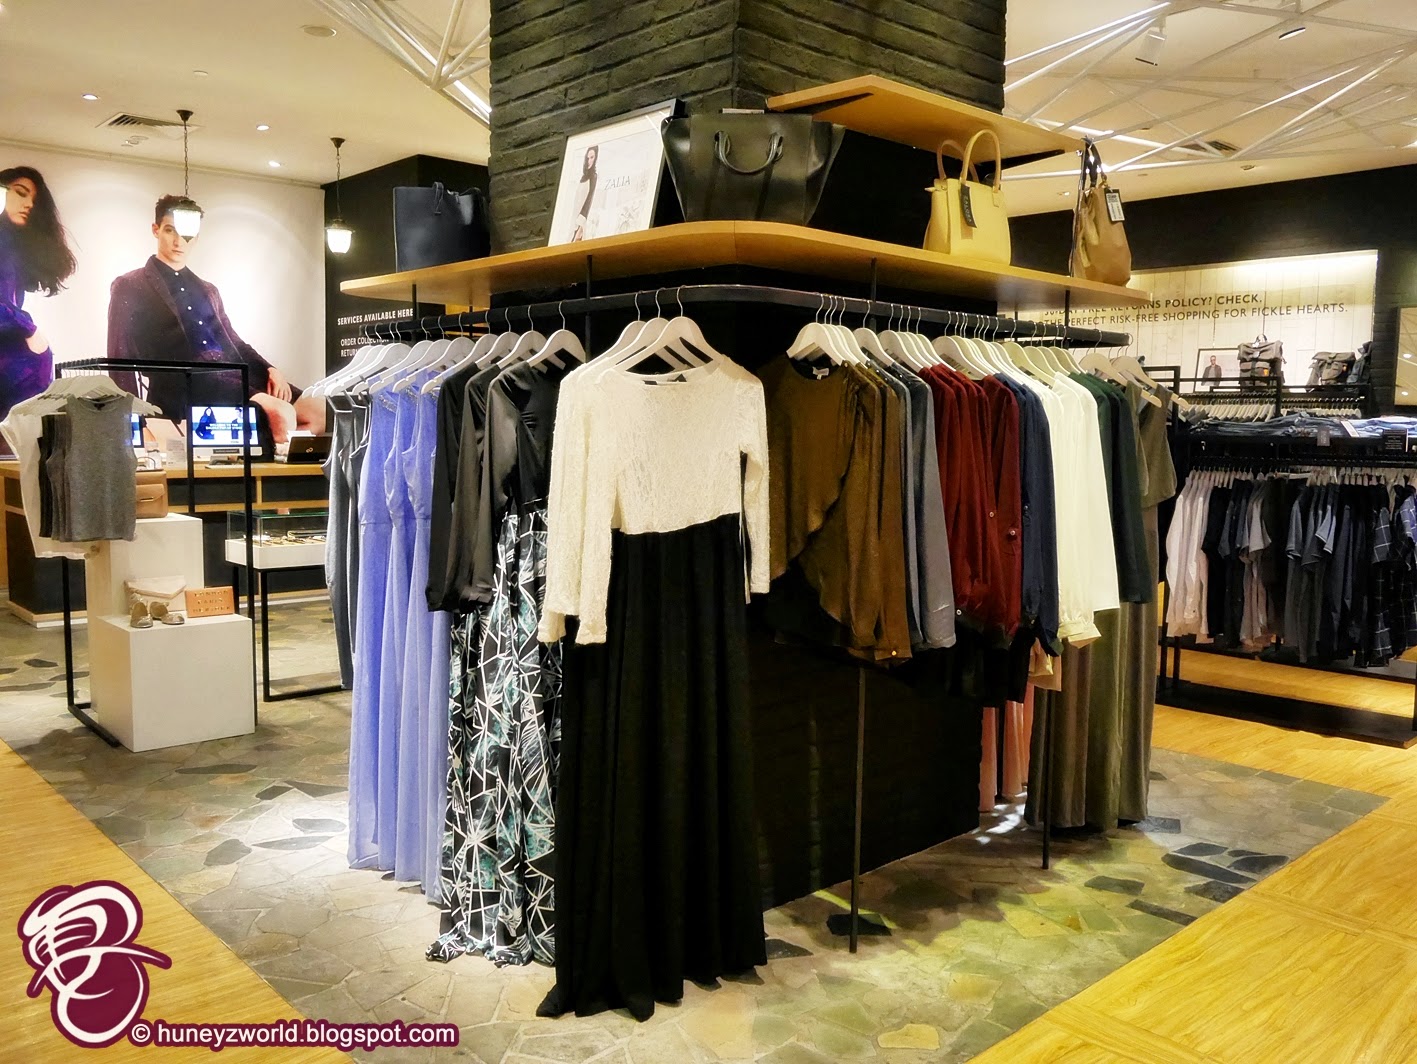 ZALORA Singapore: Fashion & Lifestyle Shopping Online